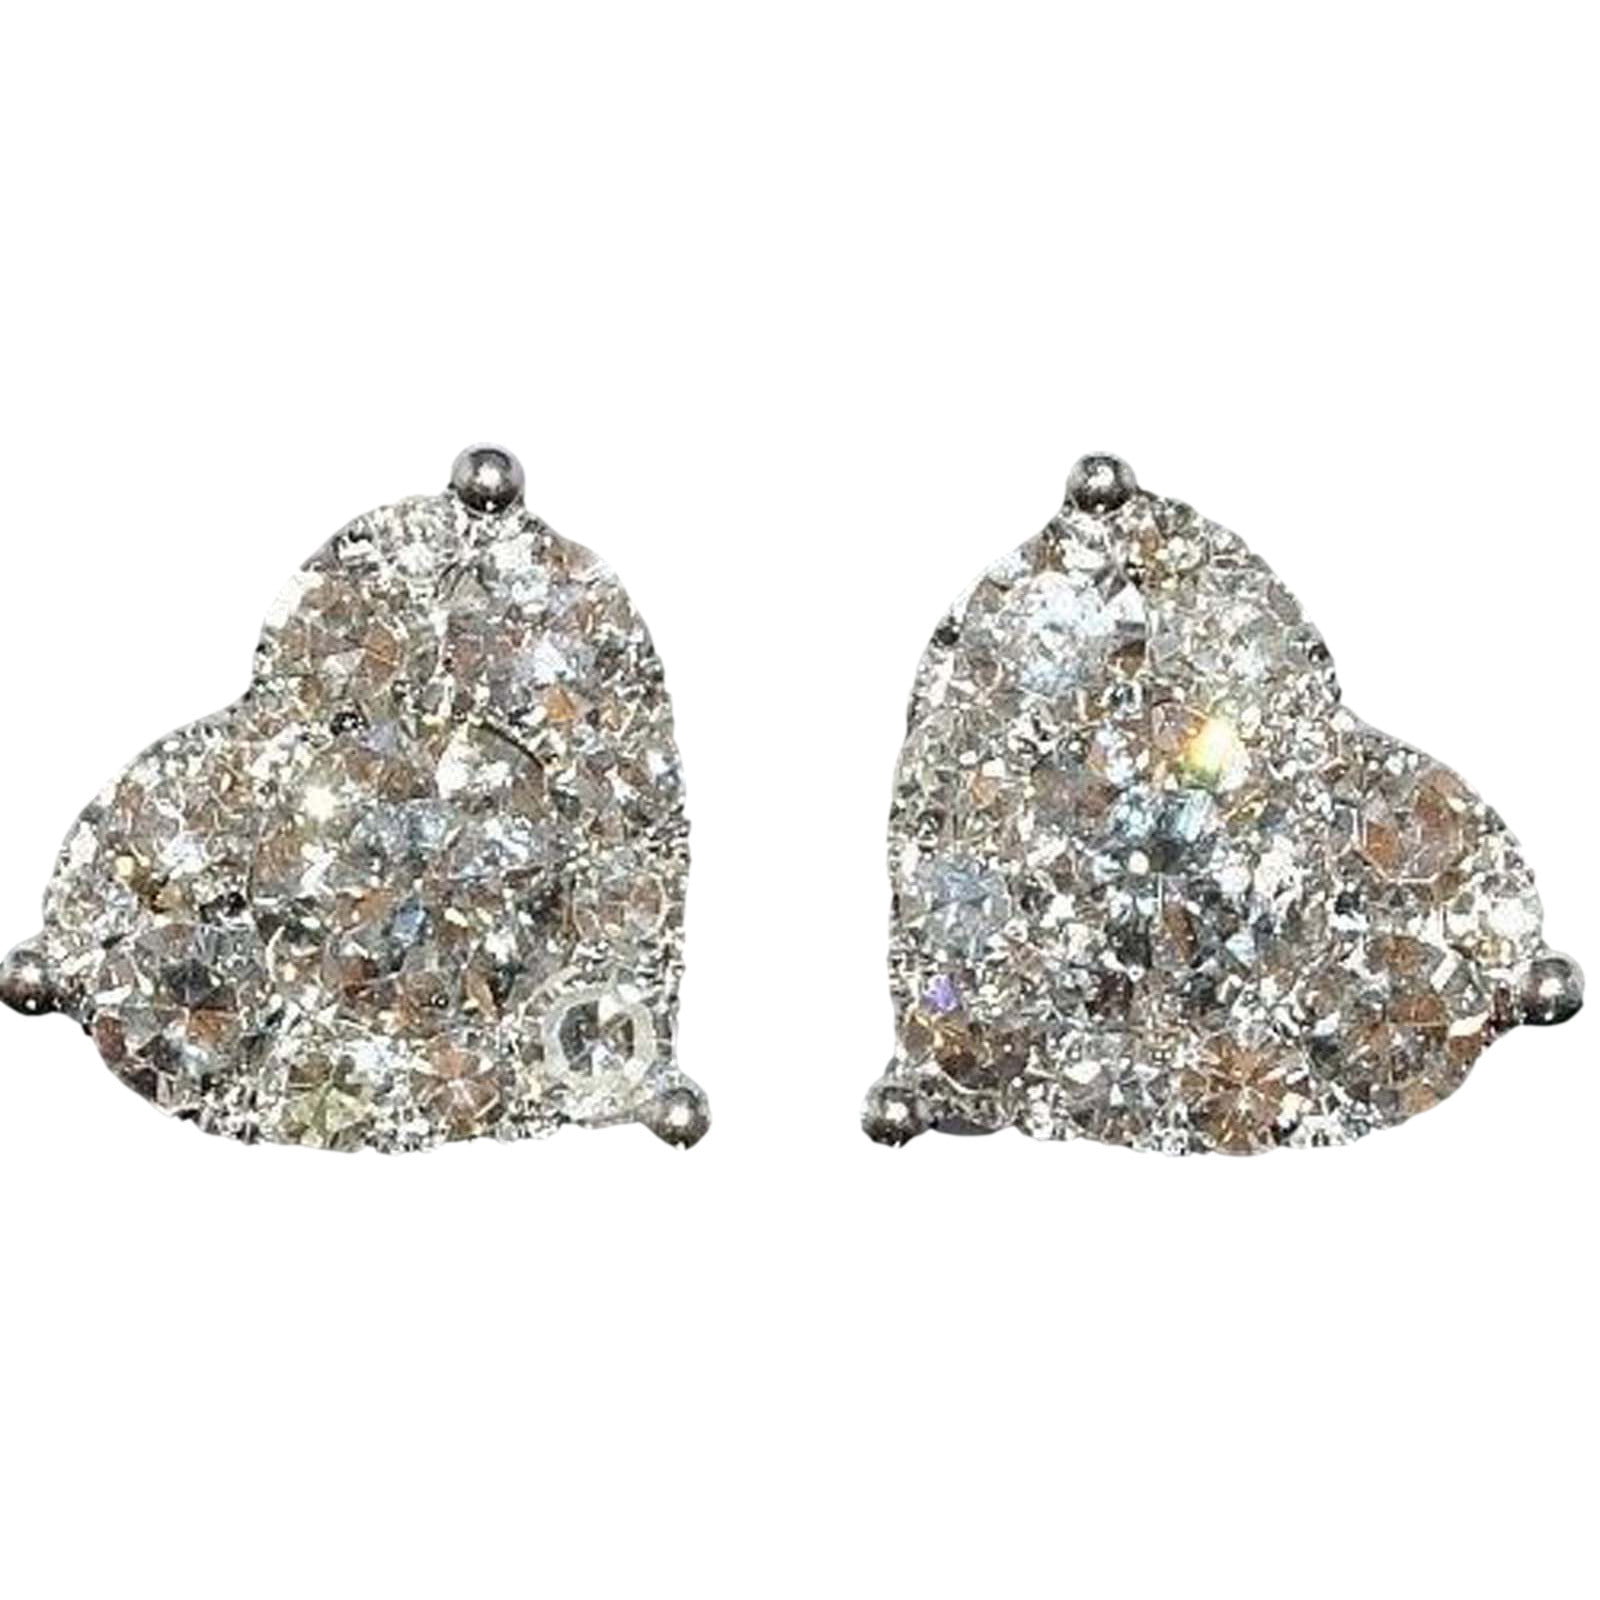 Details about   10mm Amethyst & Malachite Gemstone 925 Sterling Silver Earrings Stud Jewelry